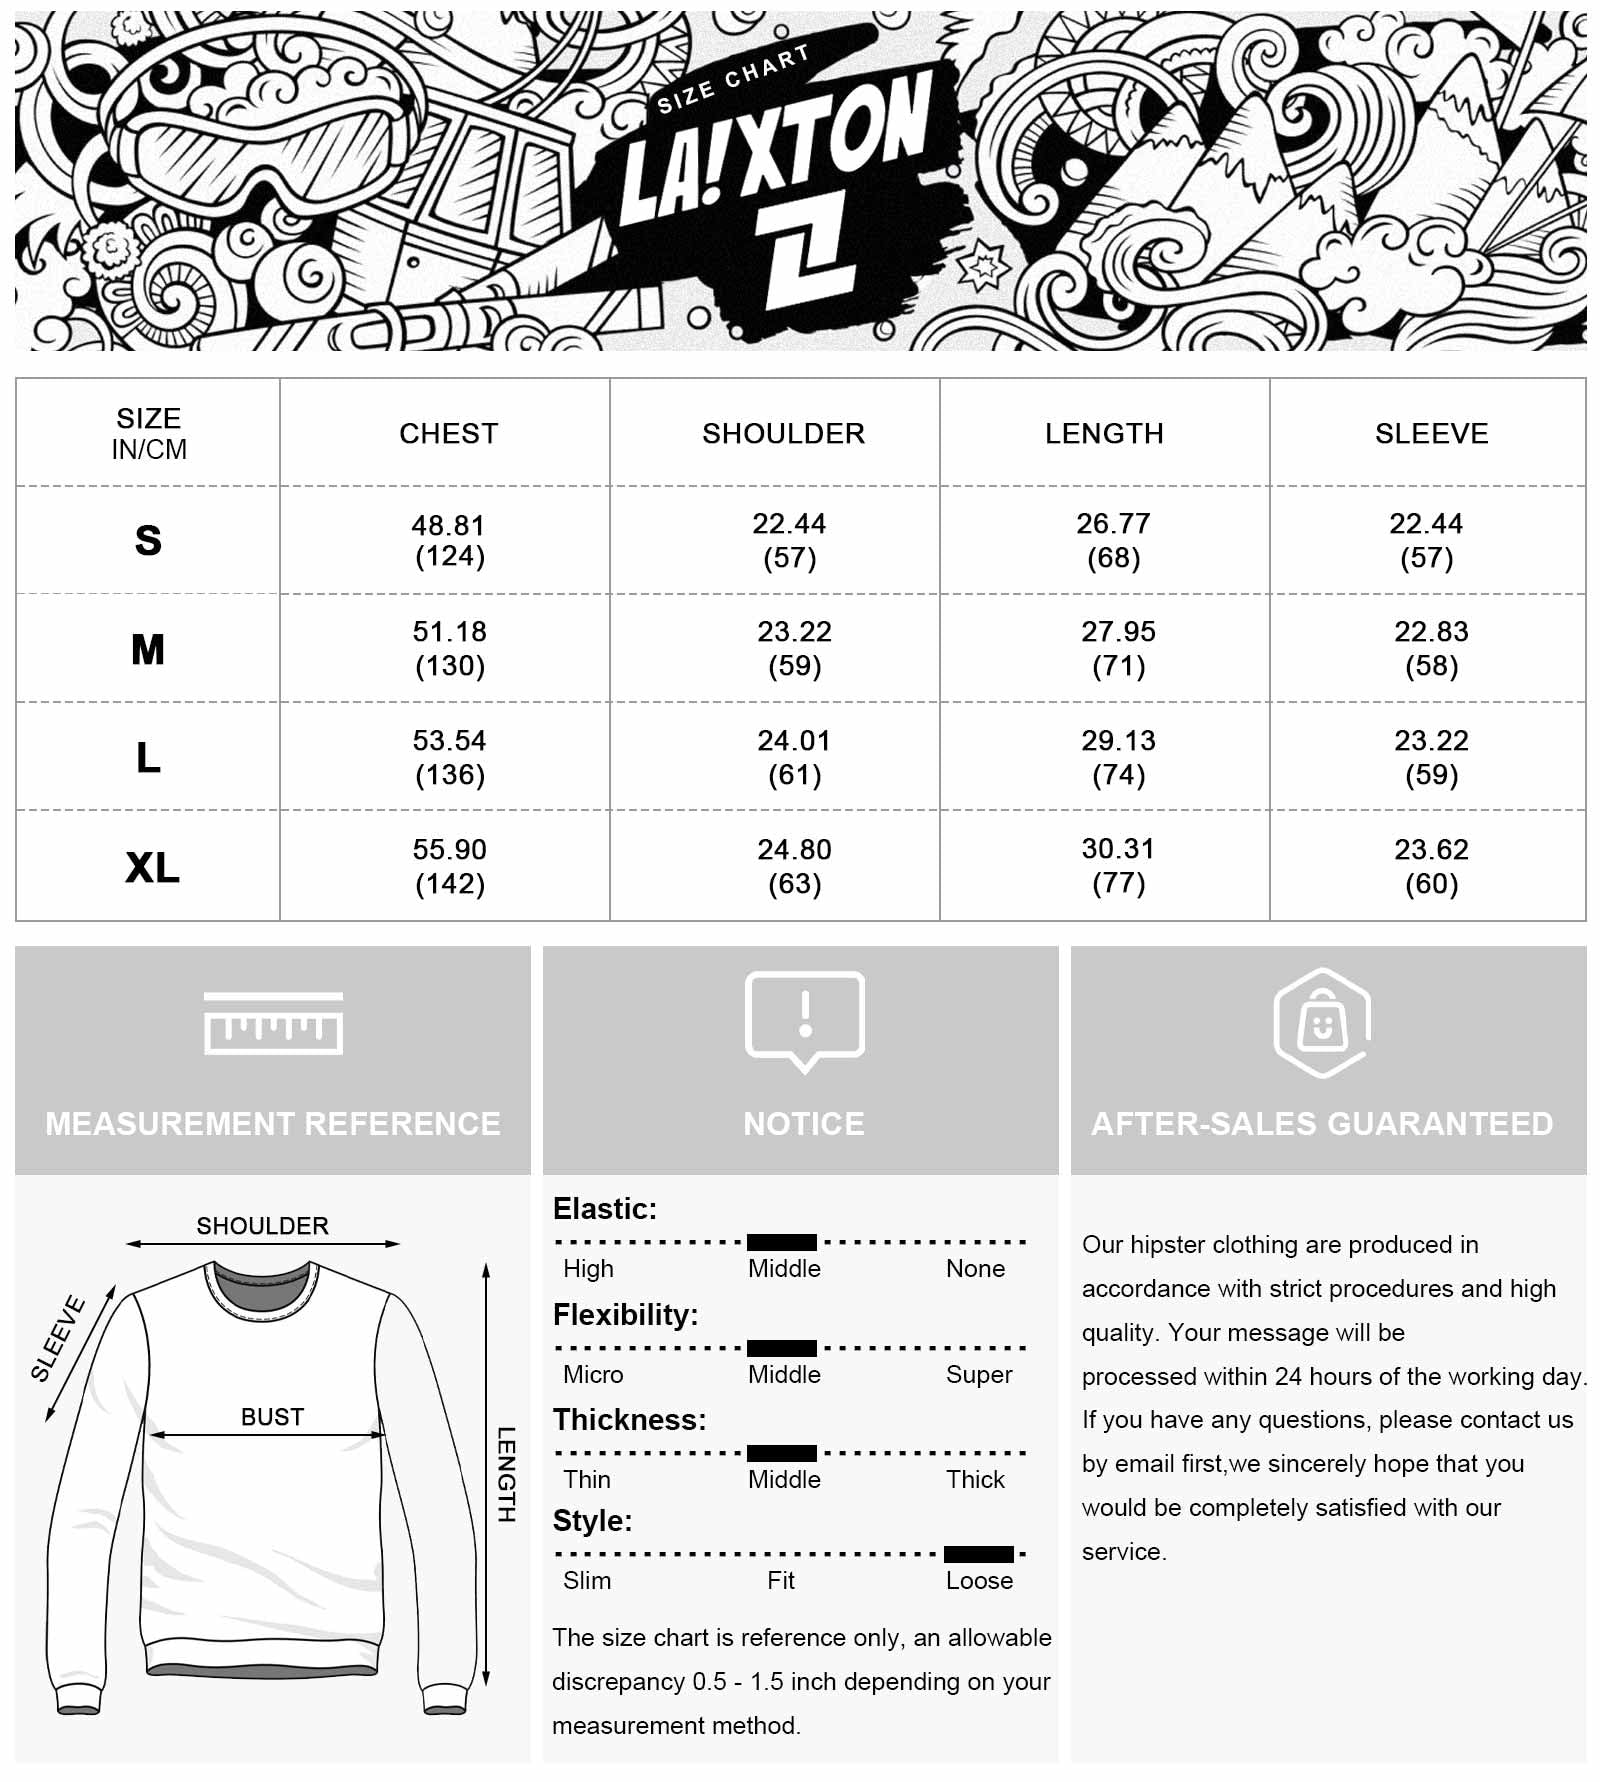 Laixton Men's Oversized Hoodie Pullover Unisex Graphic Sweatshirts Hoodies Casual Tunic Anime Streetwear Aesthetic Top Pink